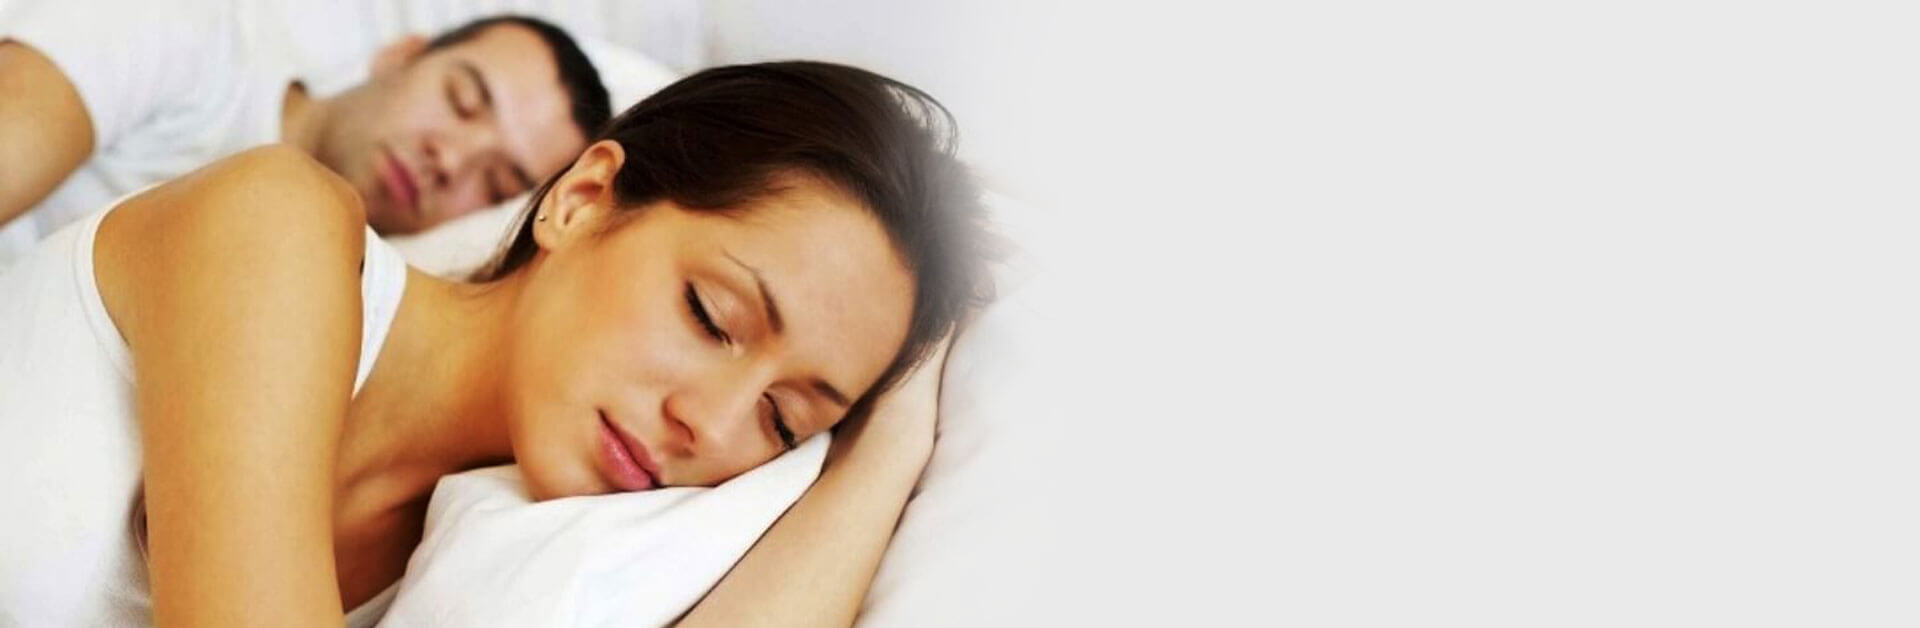 HOW CAN I PRACTICE BETTER SLEEP HABITS?